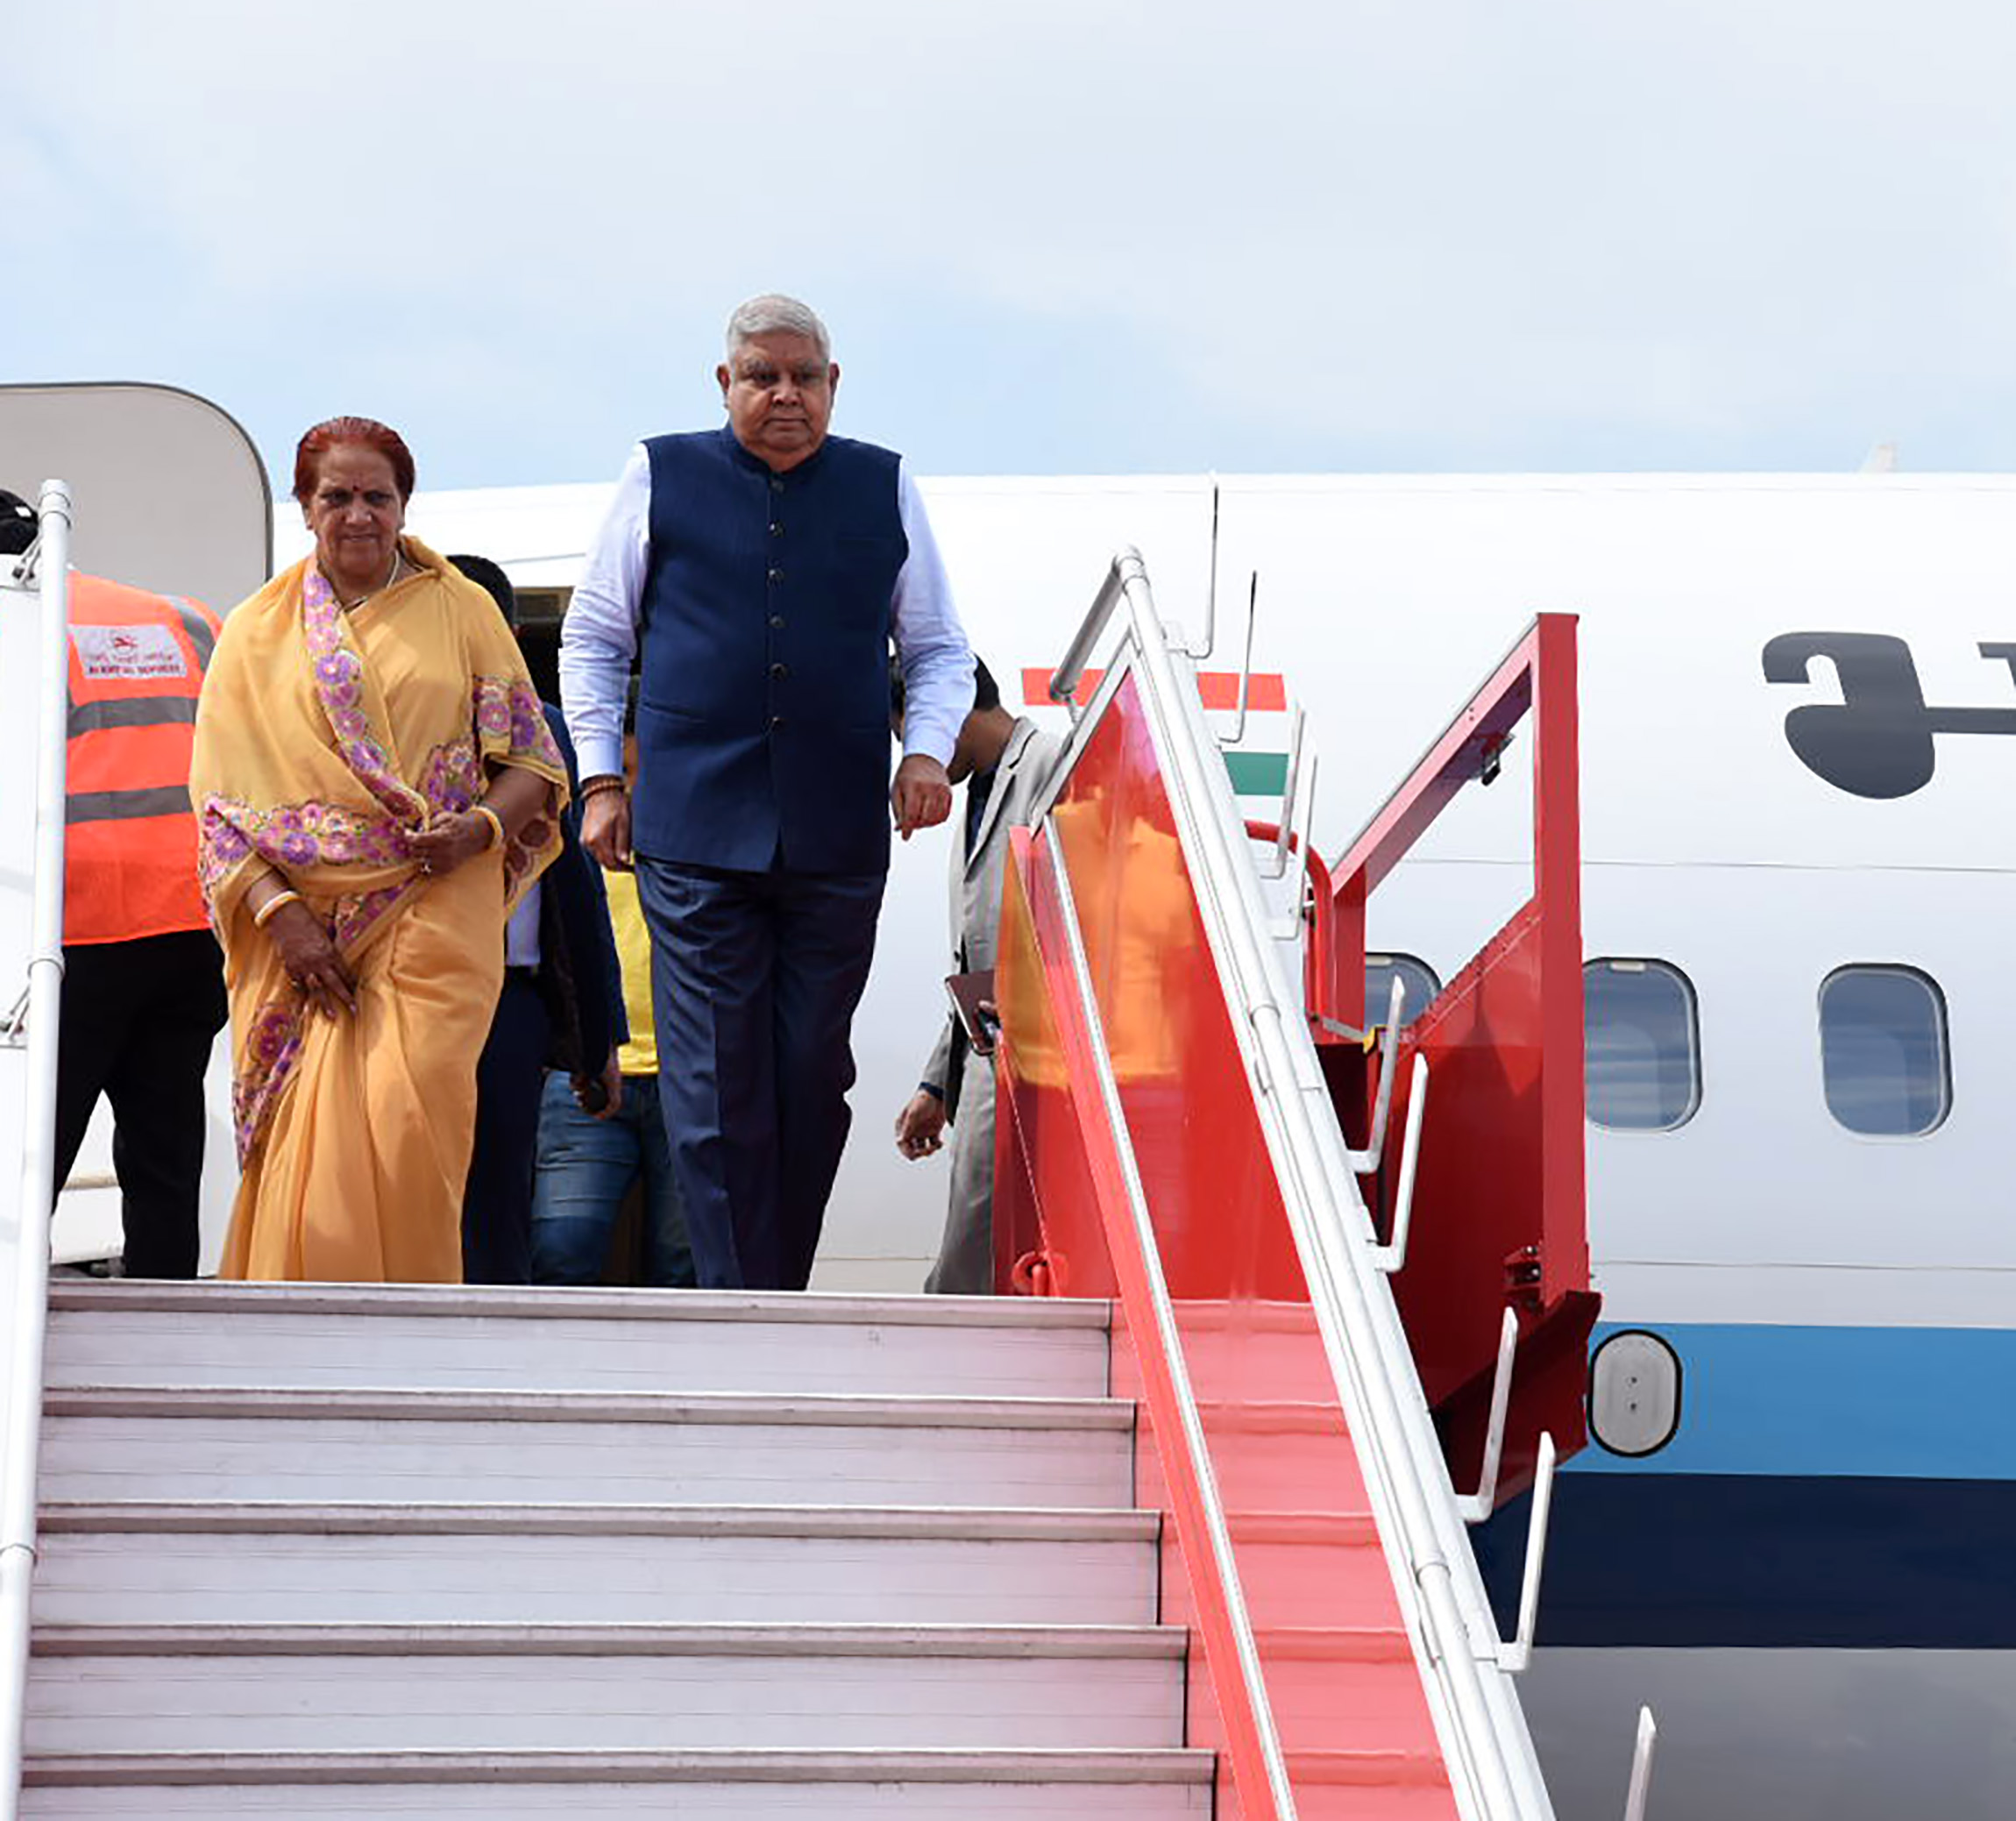 The Vice President, Shri Jagdeep Dhankhar and Dr. Sudesh Dhankhar arriving in Guwahati, Assam on September 22, 2022.